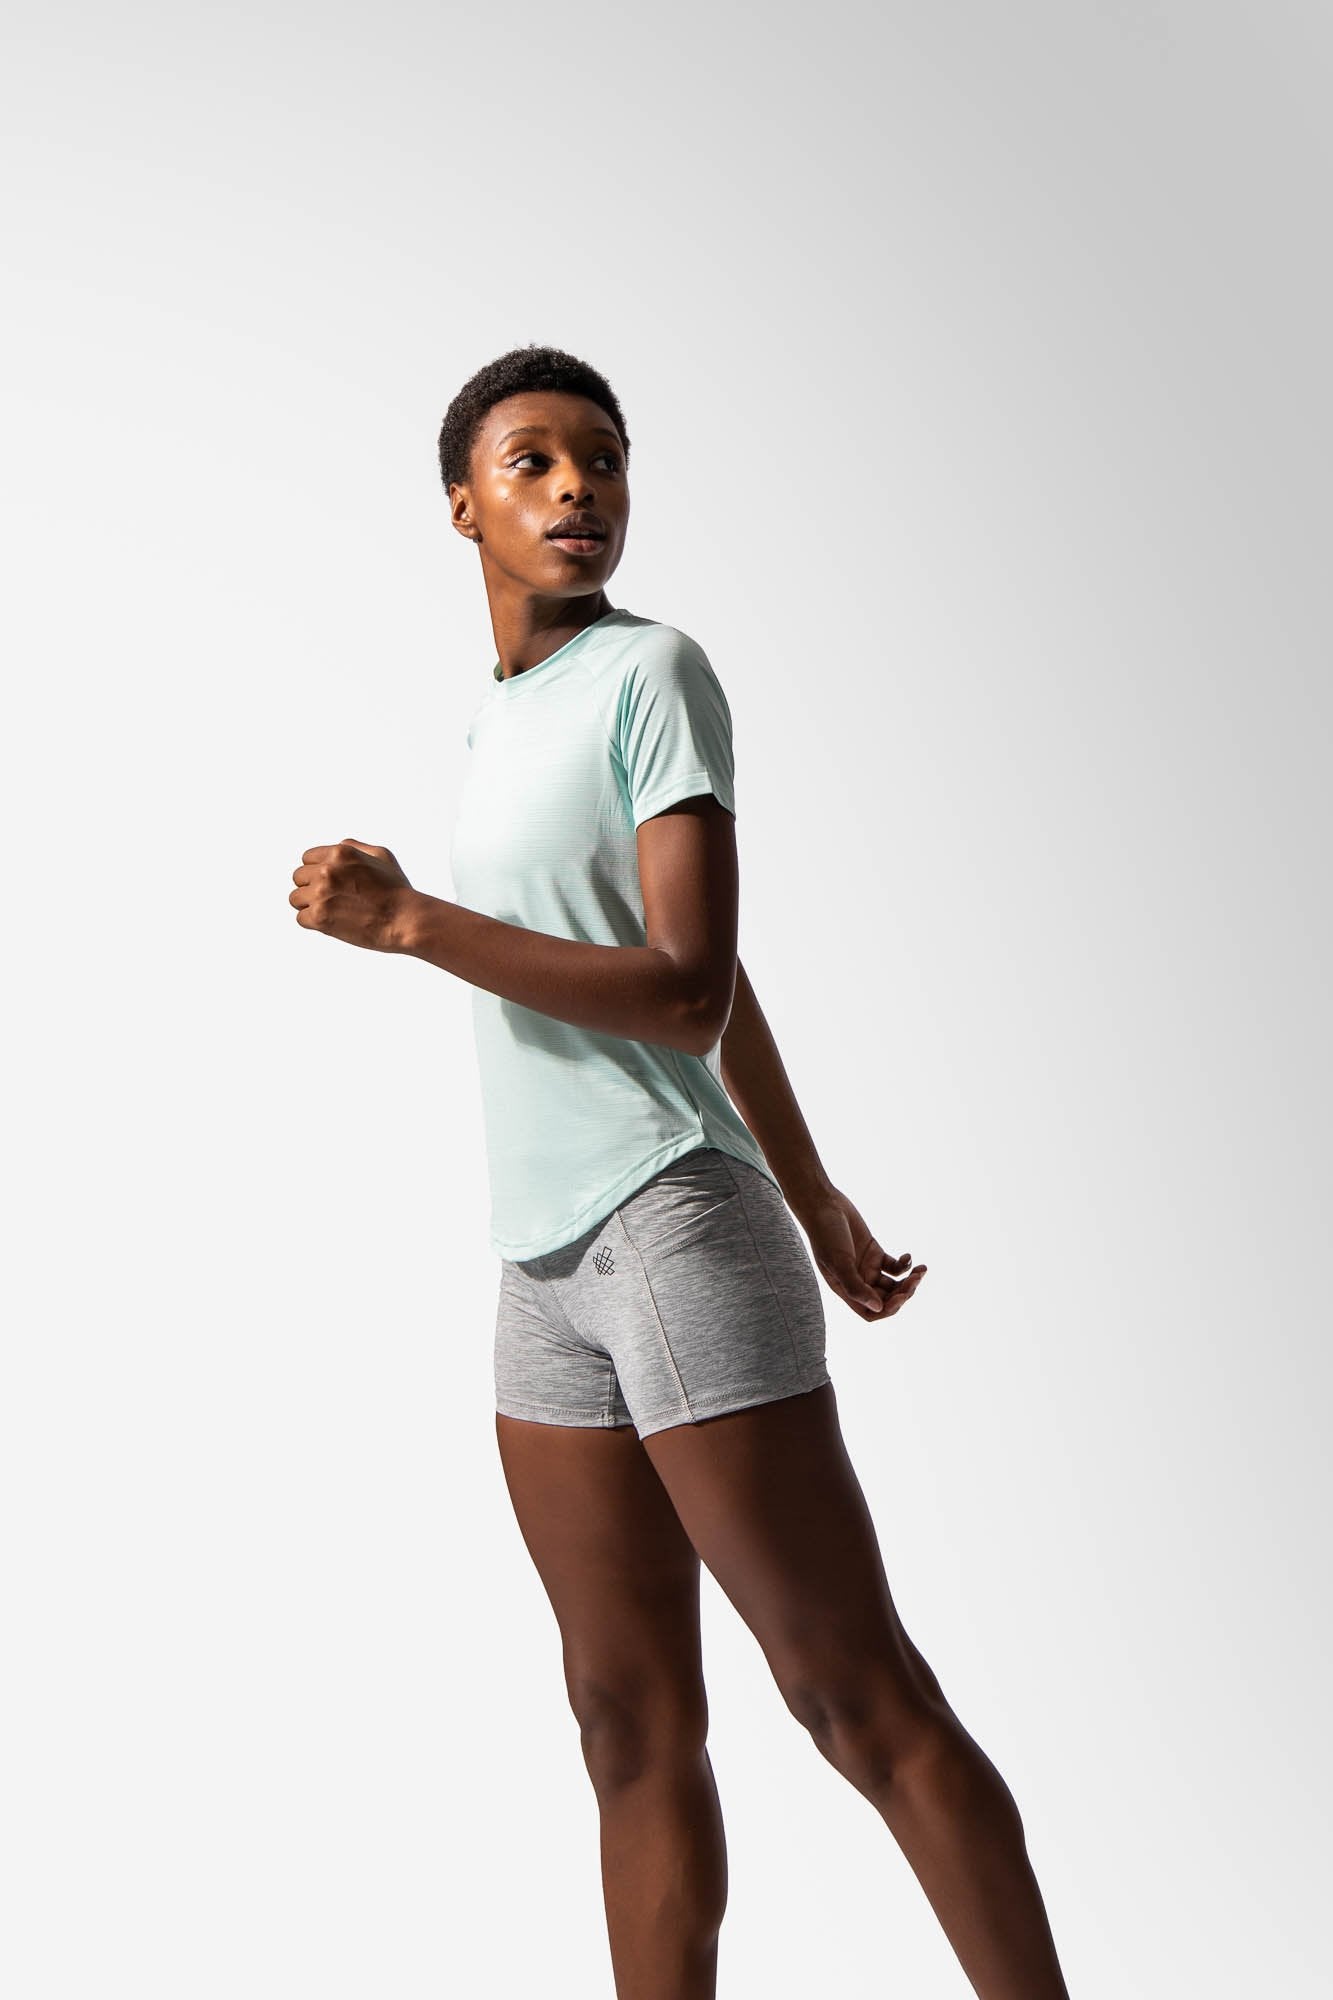 Full-Length Light-Weight Gym T-Shirt - Mint Women's Crop Top Jed North 